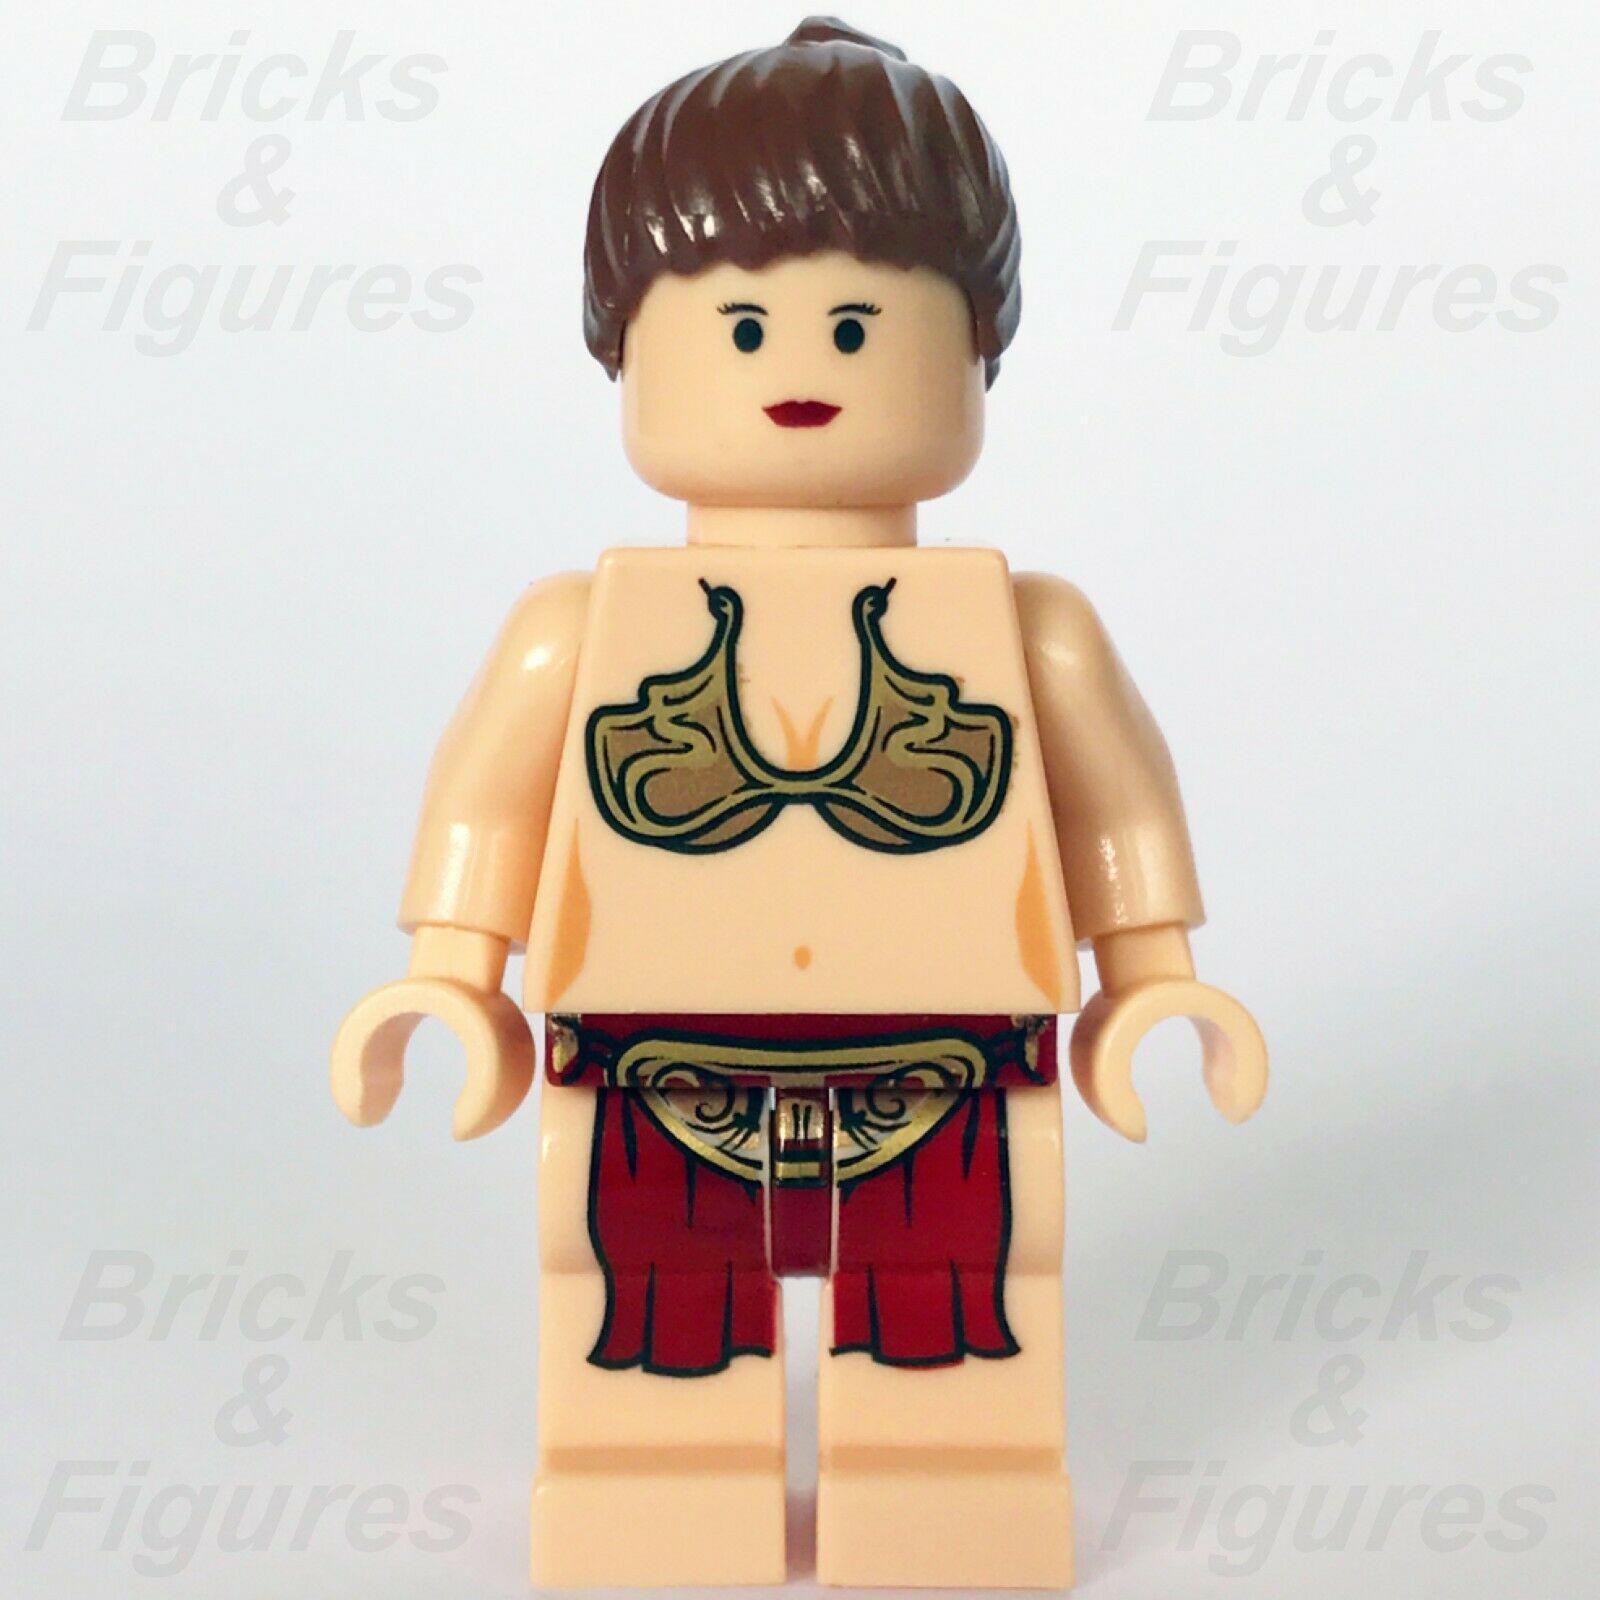 New Star Wars LEGO Princess Leia Jabba the Hutt Slave Outfit Minifigure 852552 - Bricks & Figures